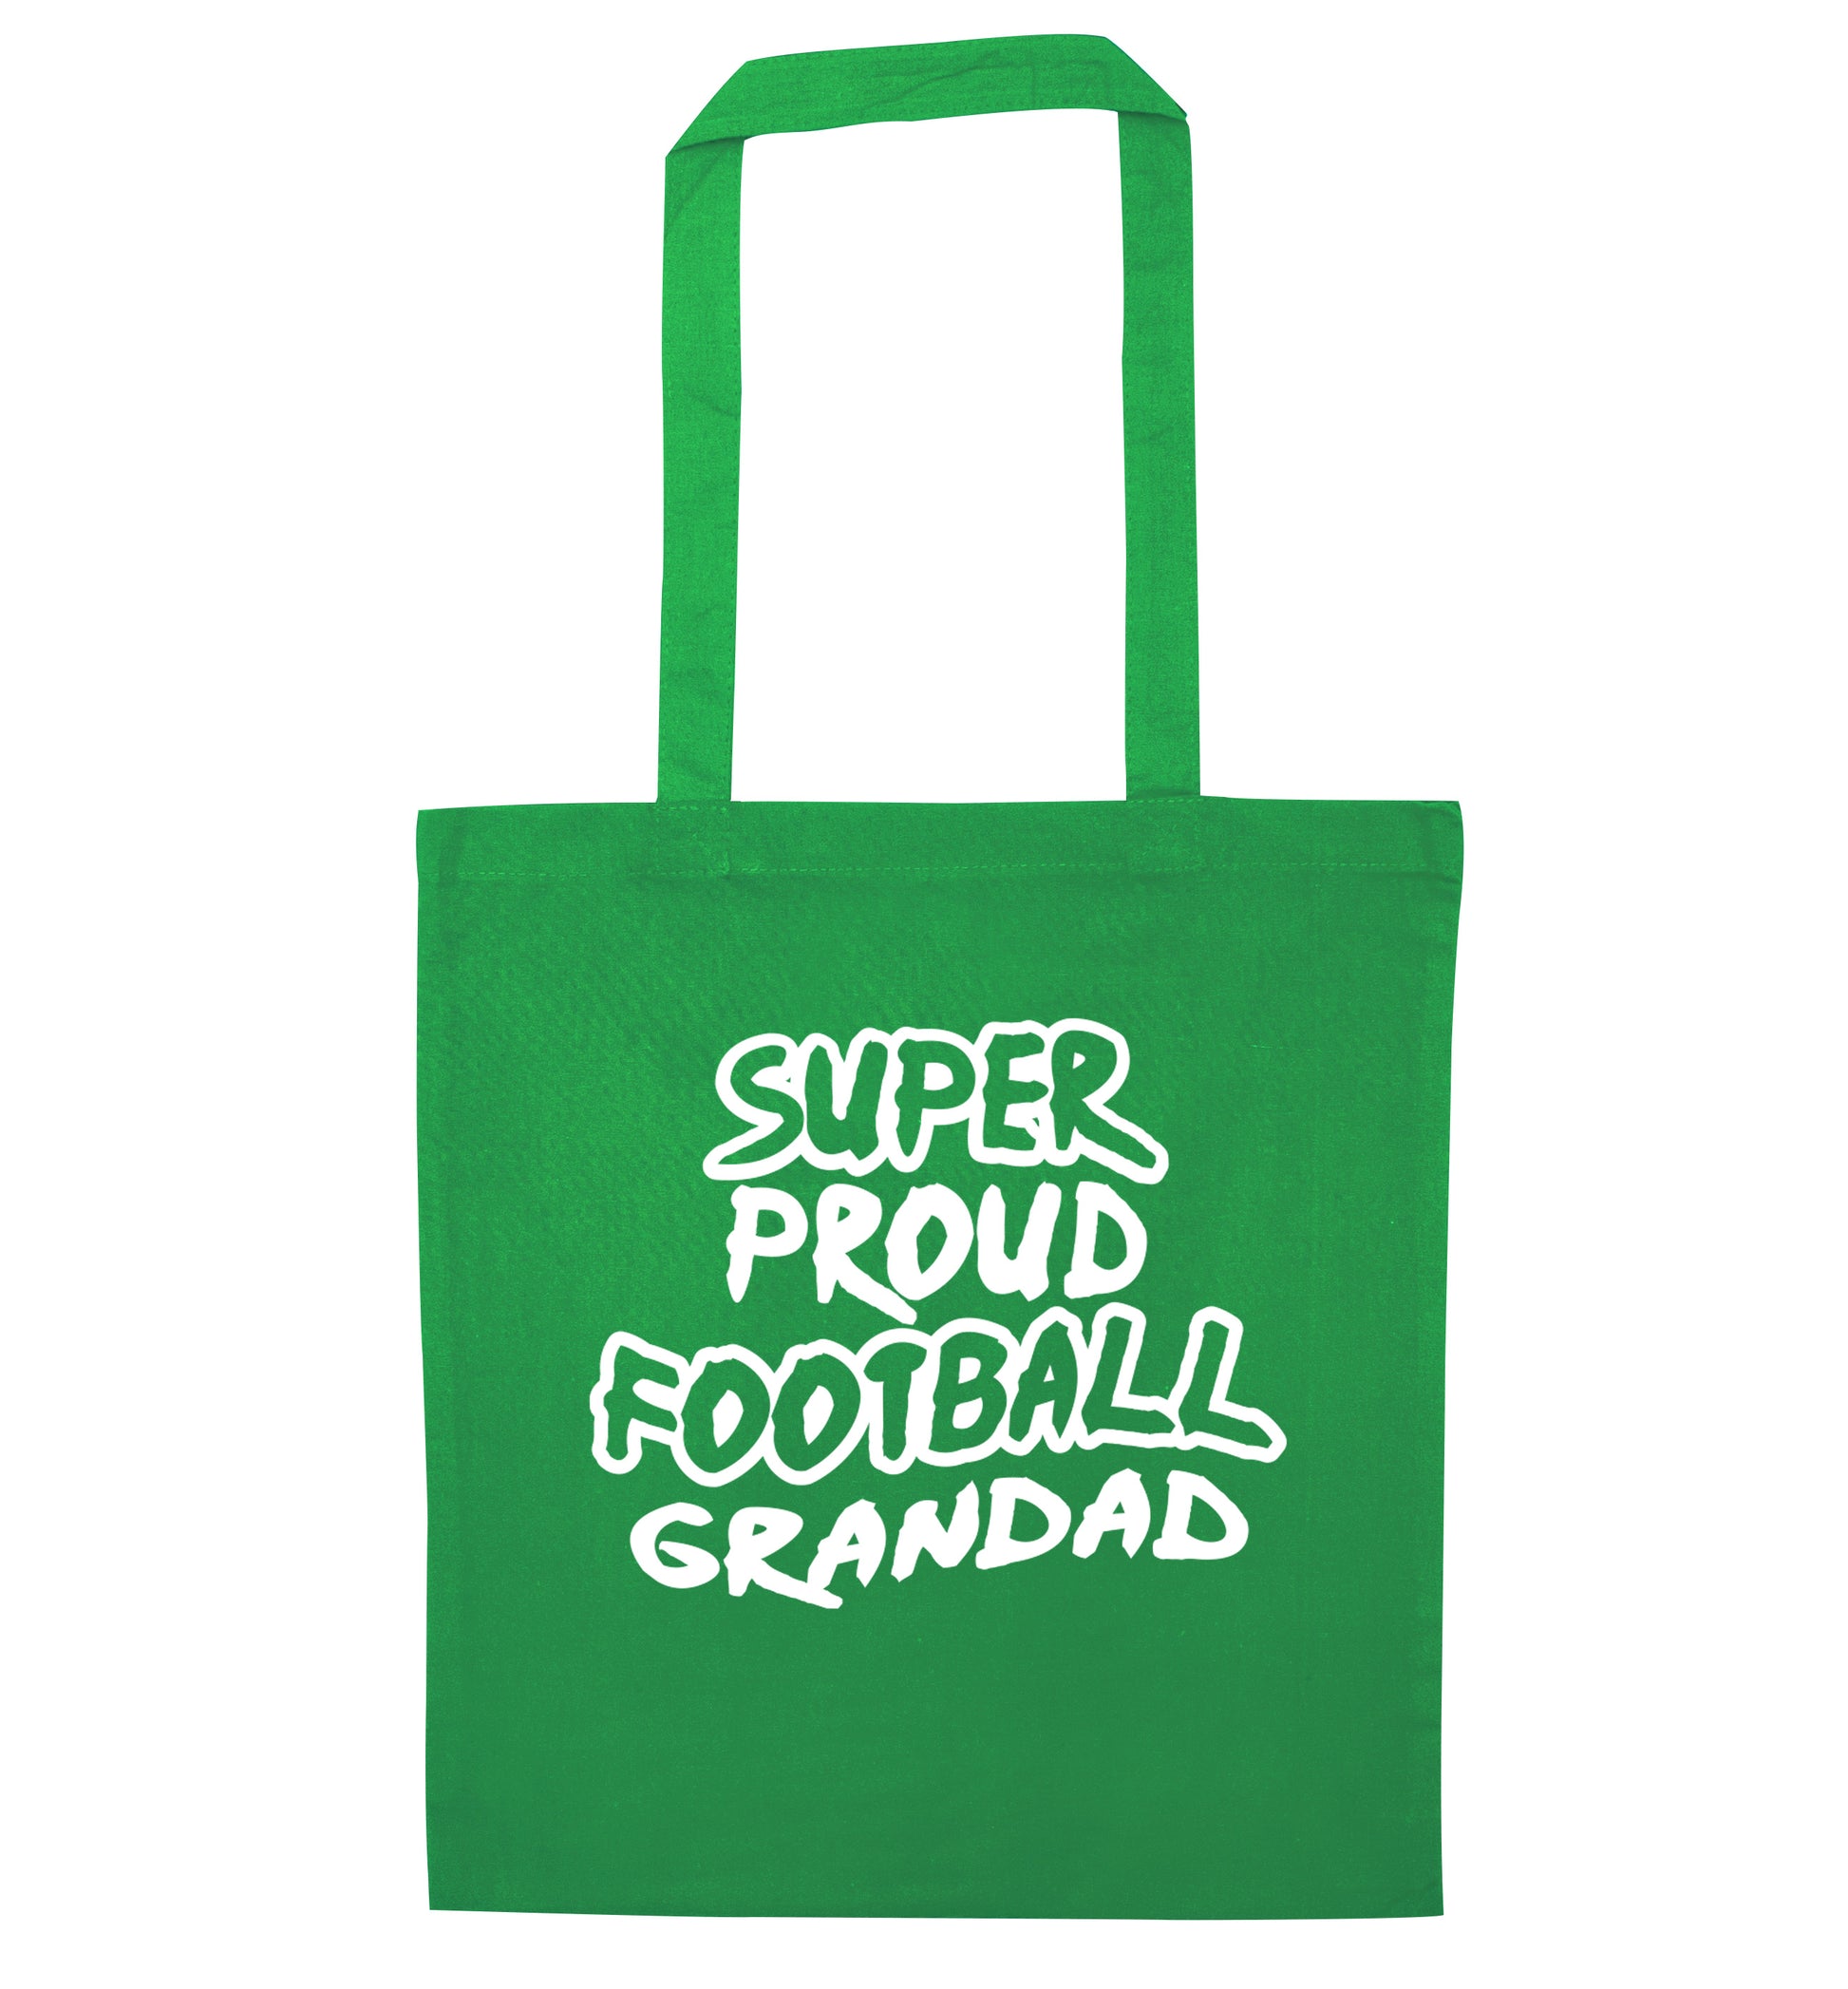 Super proud football grandad green tote bag